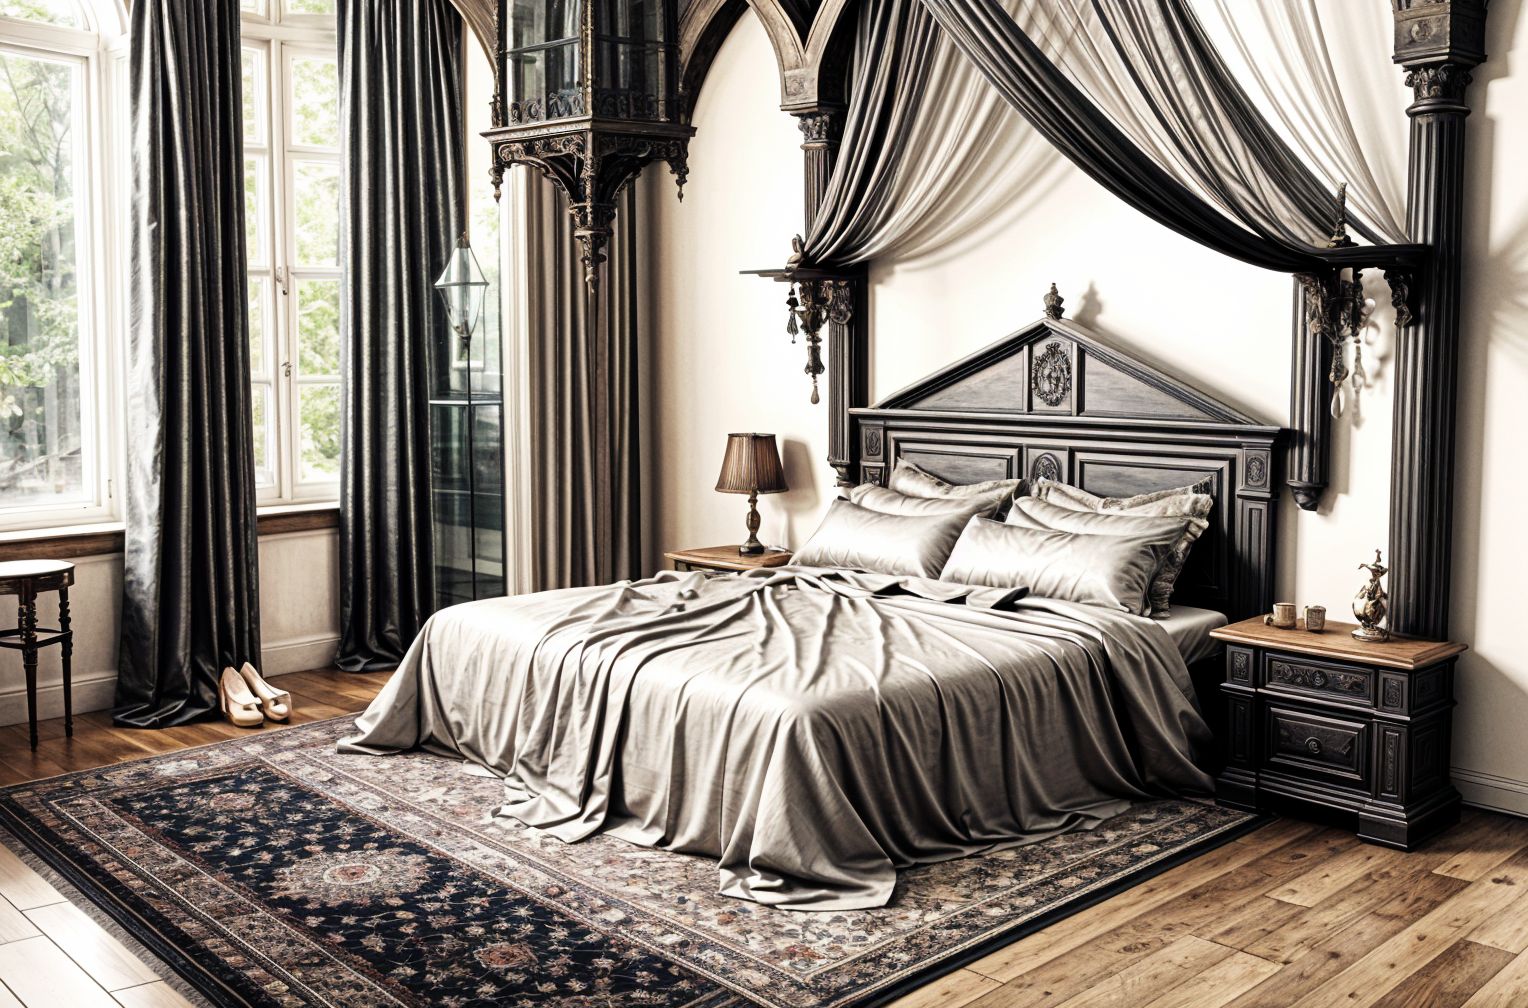 Gothic style Bedroom